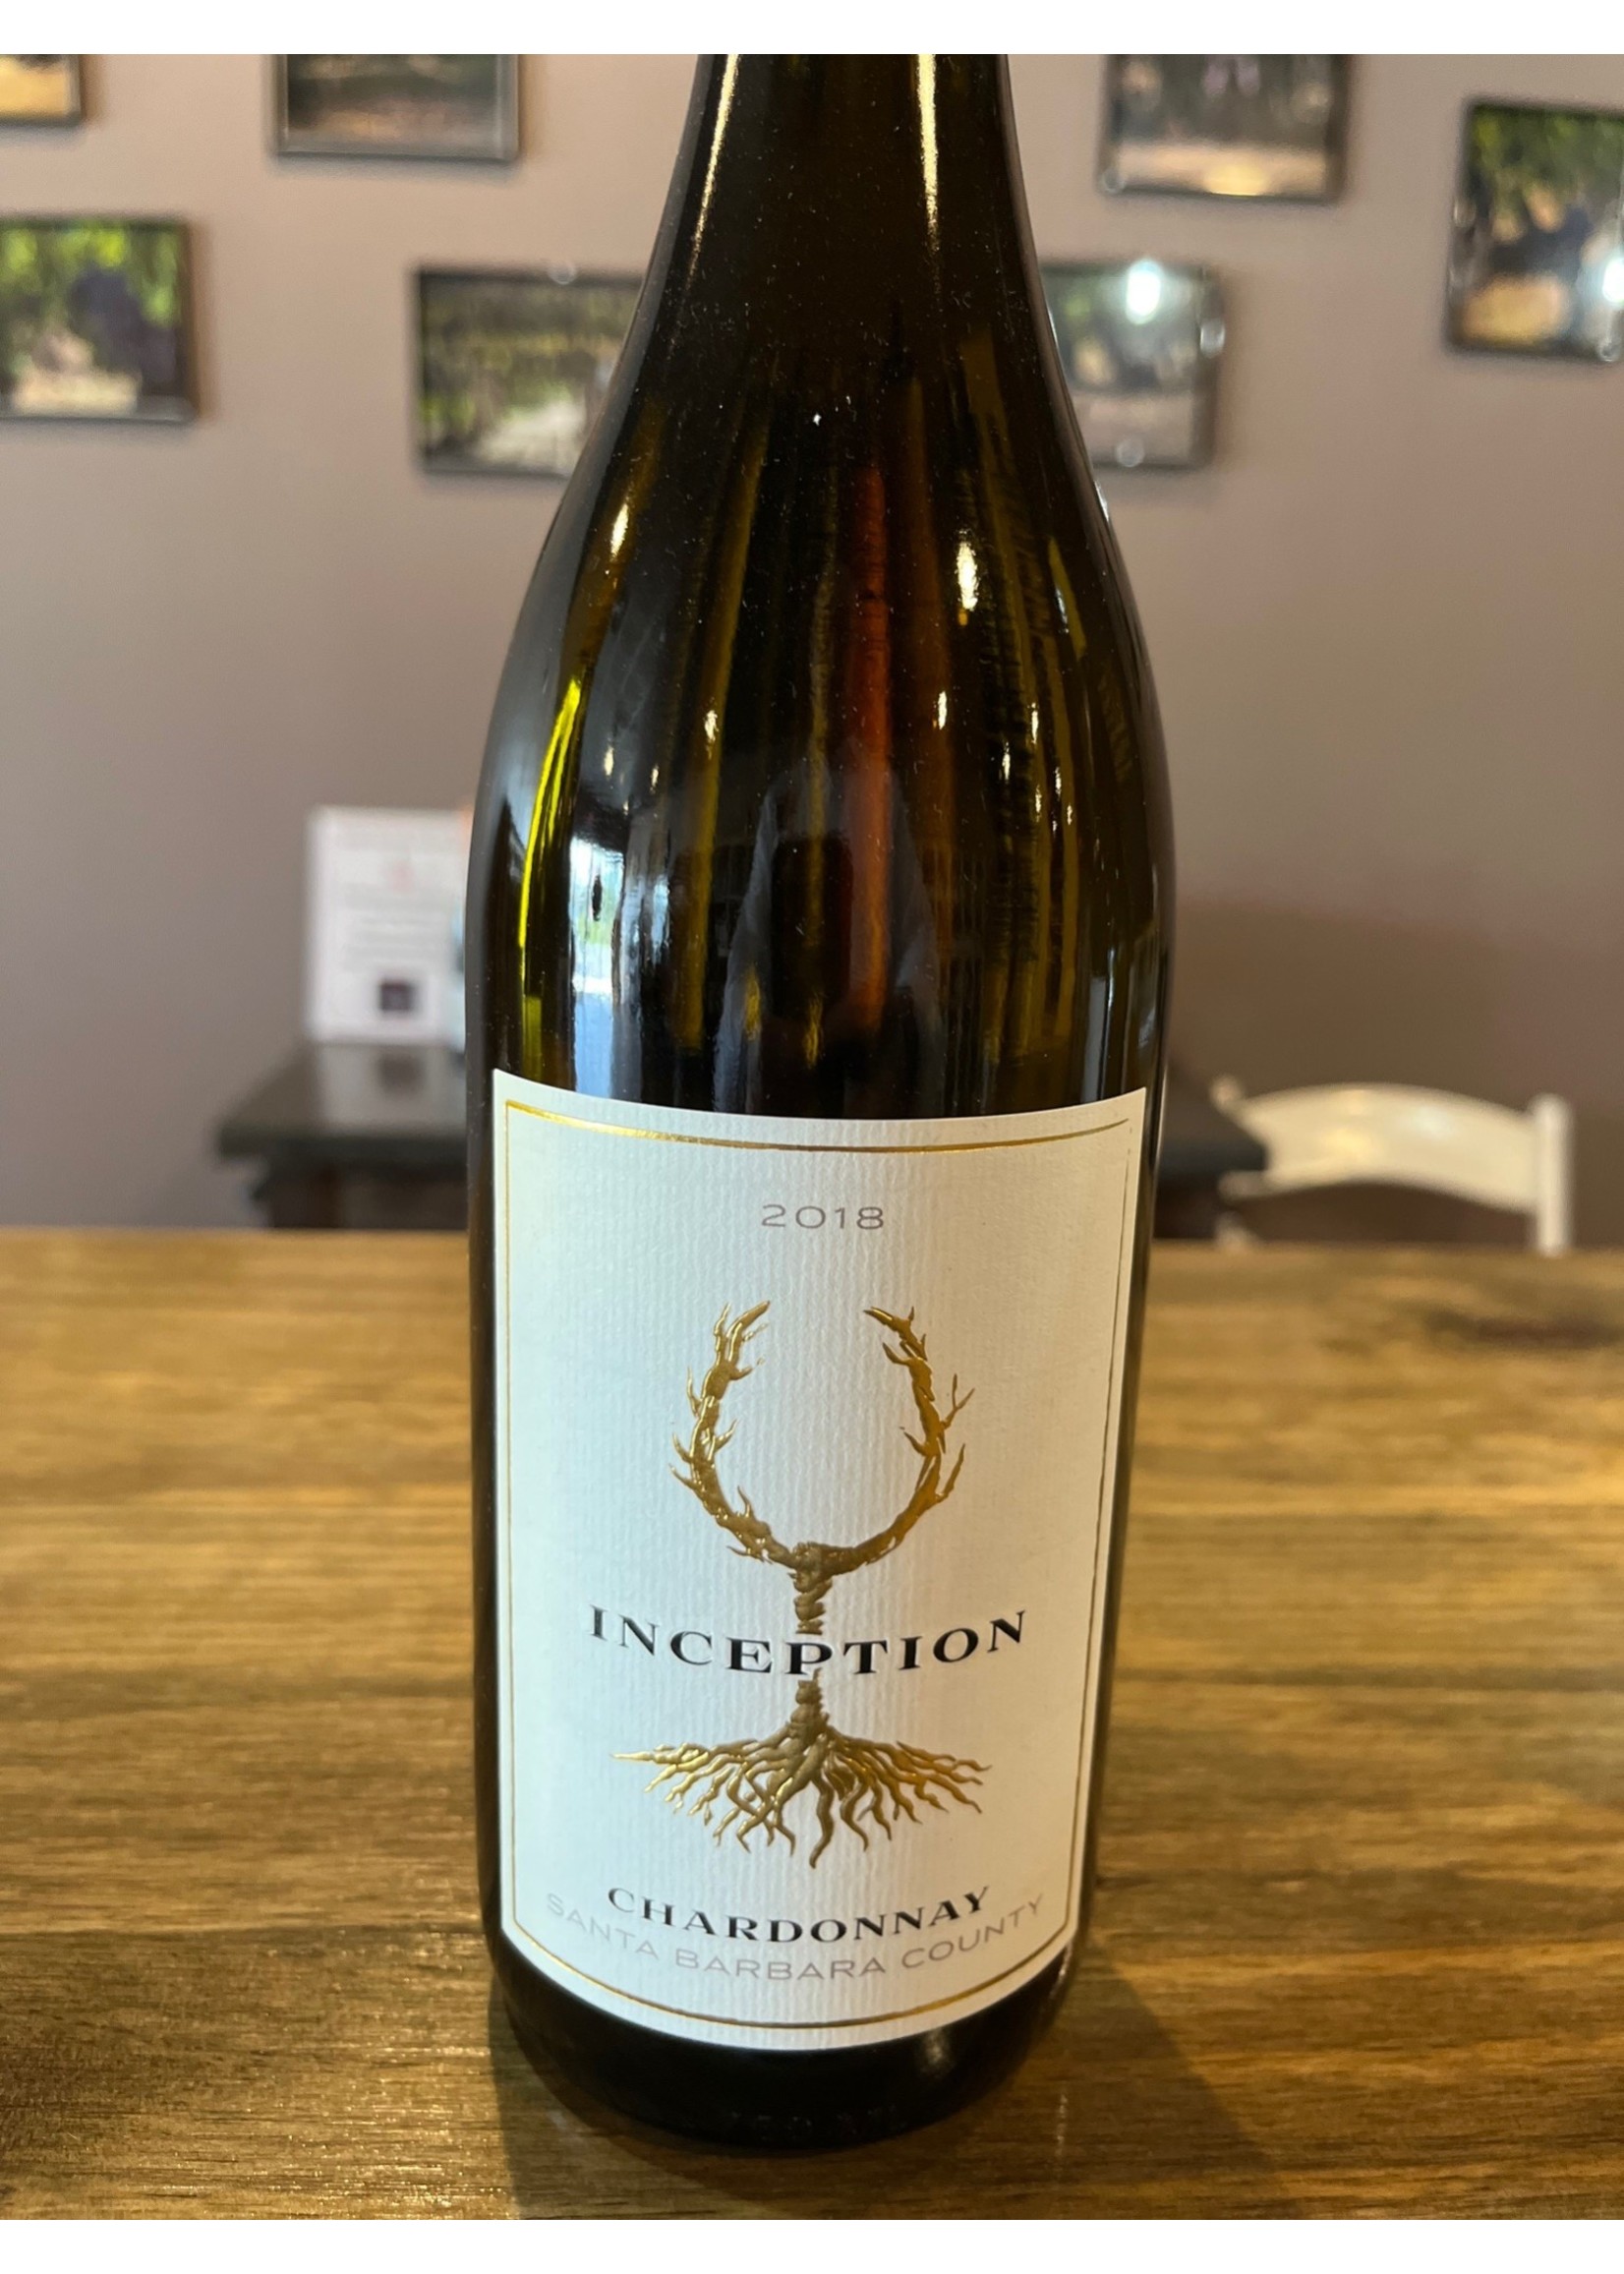 Inception Chardonnay 2018